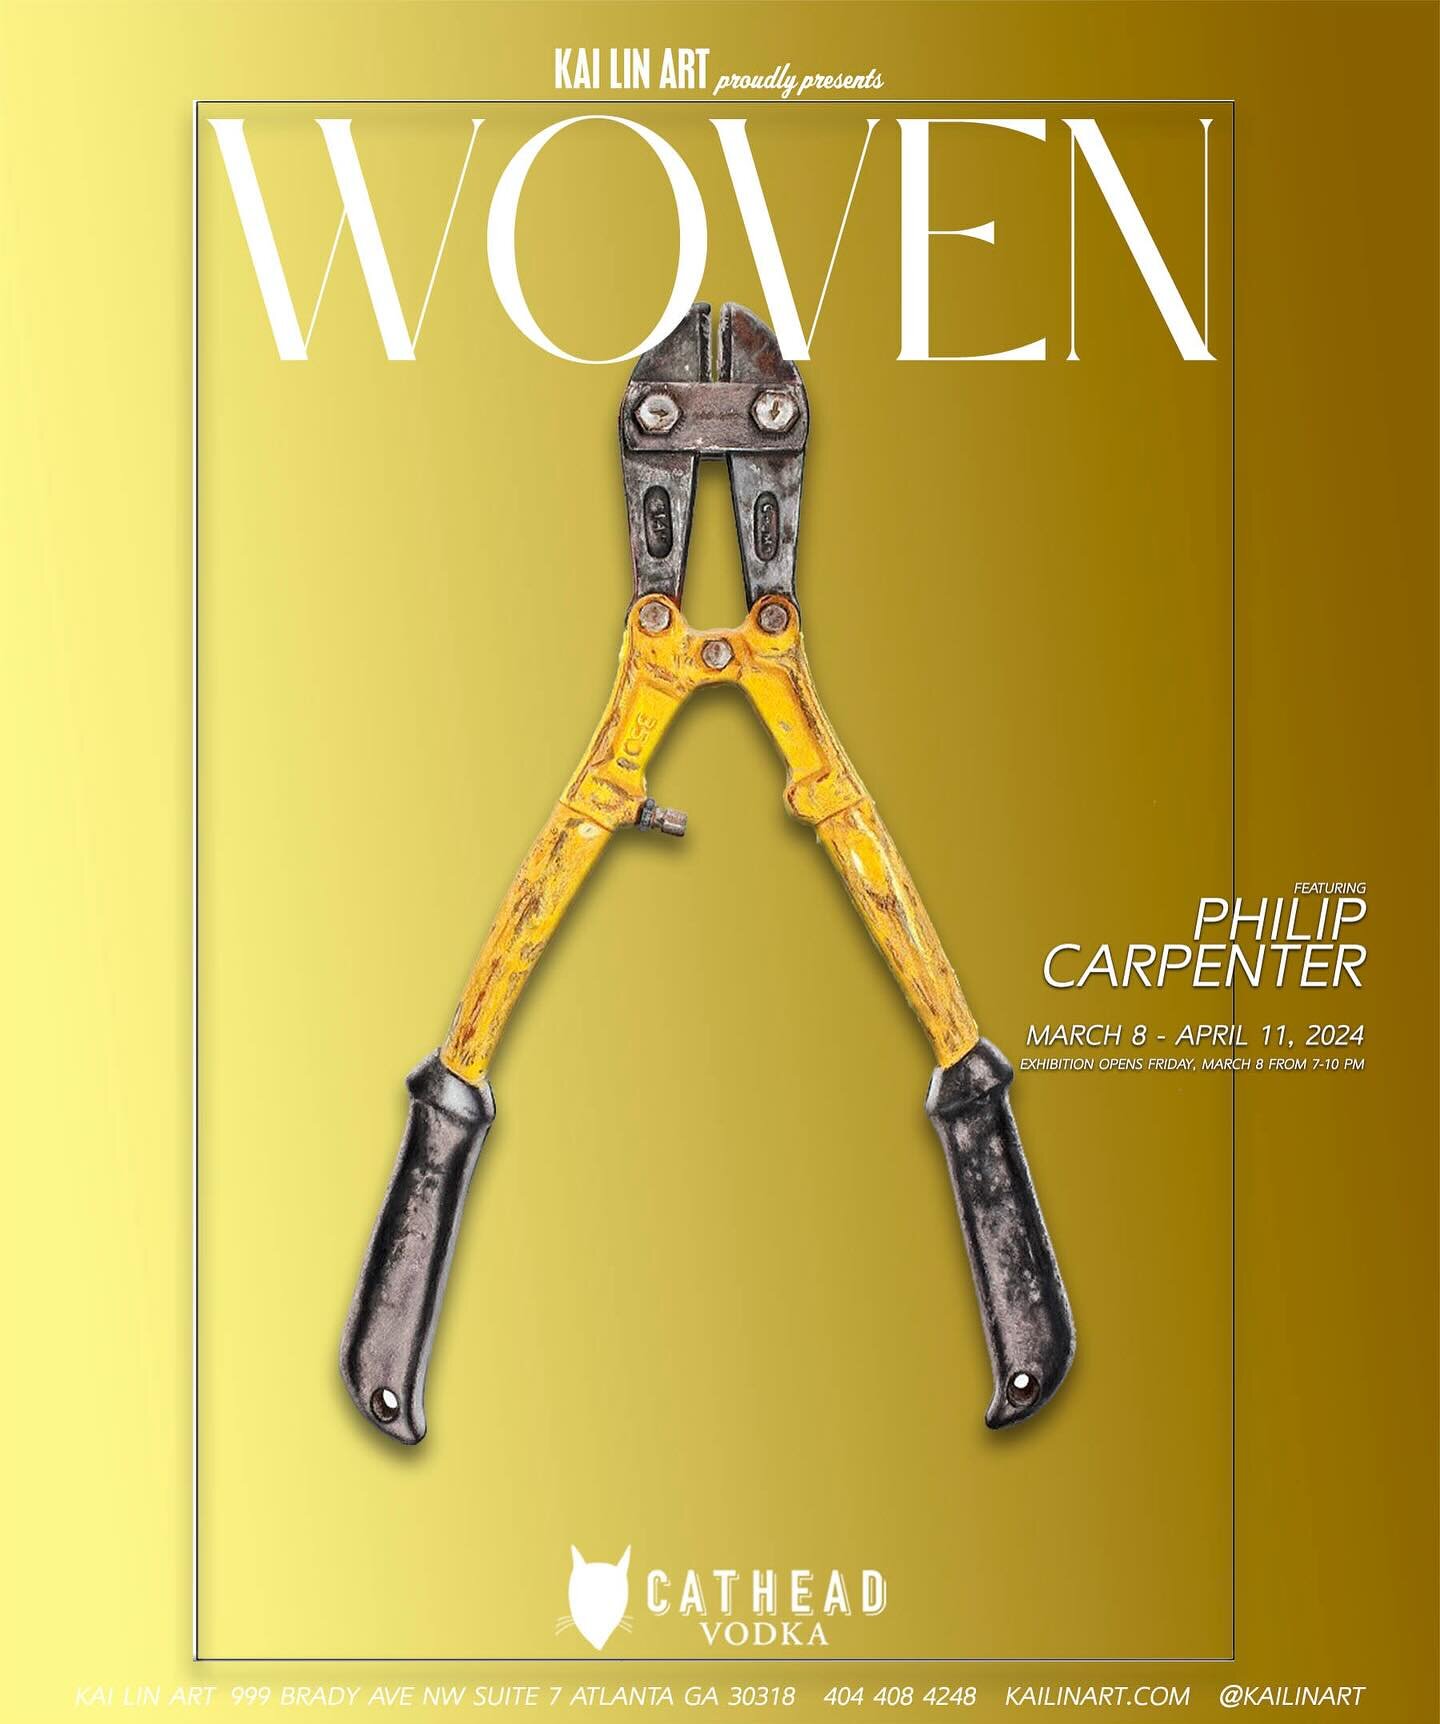 WOVEN feat. @jphilipcarpenter launches @kailinart March 8th 🫶🎨✂️
https://www.kailinart.com/news/woven